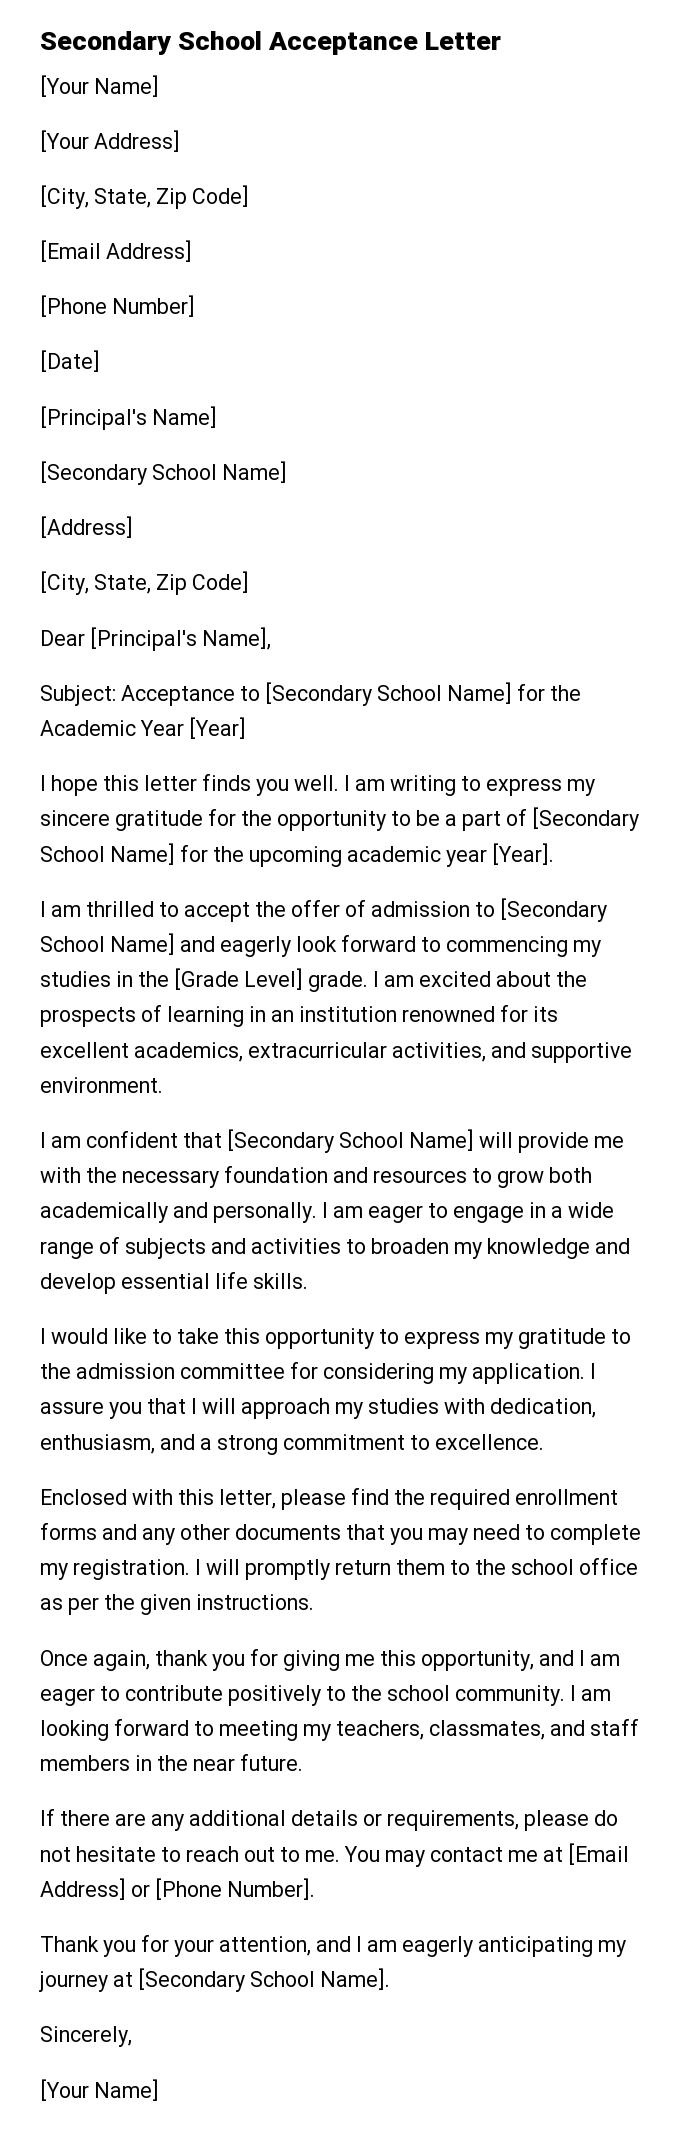 Secondary School Acceptance Letter